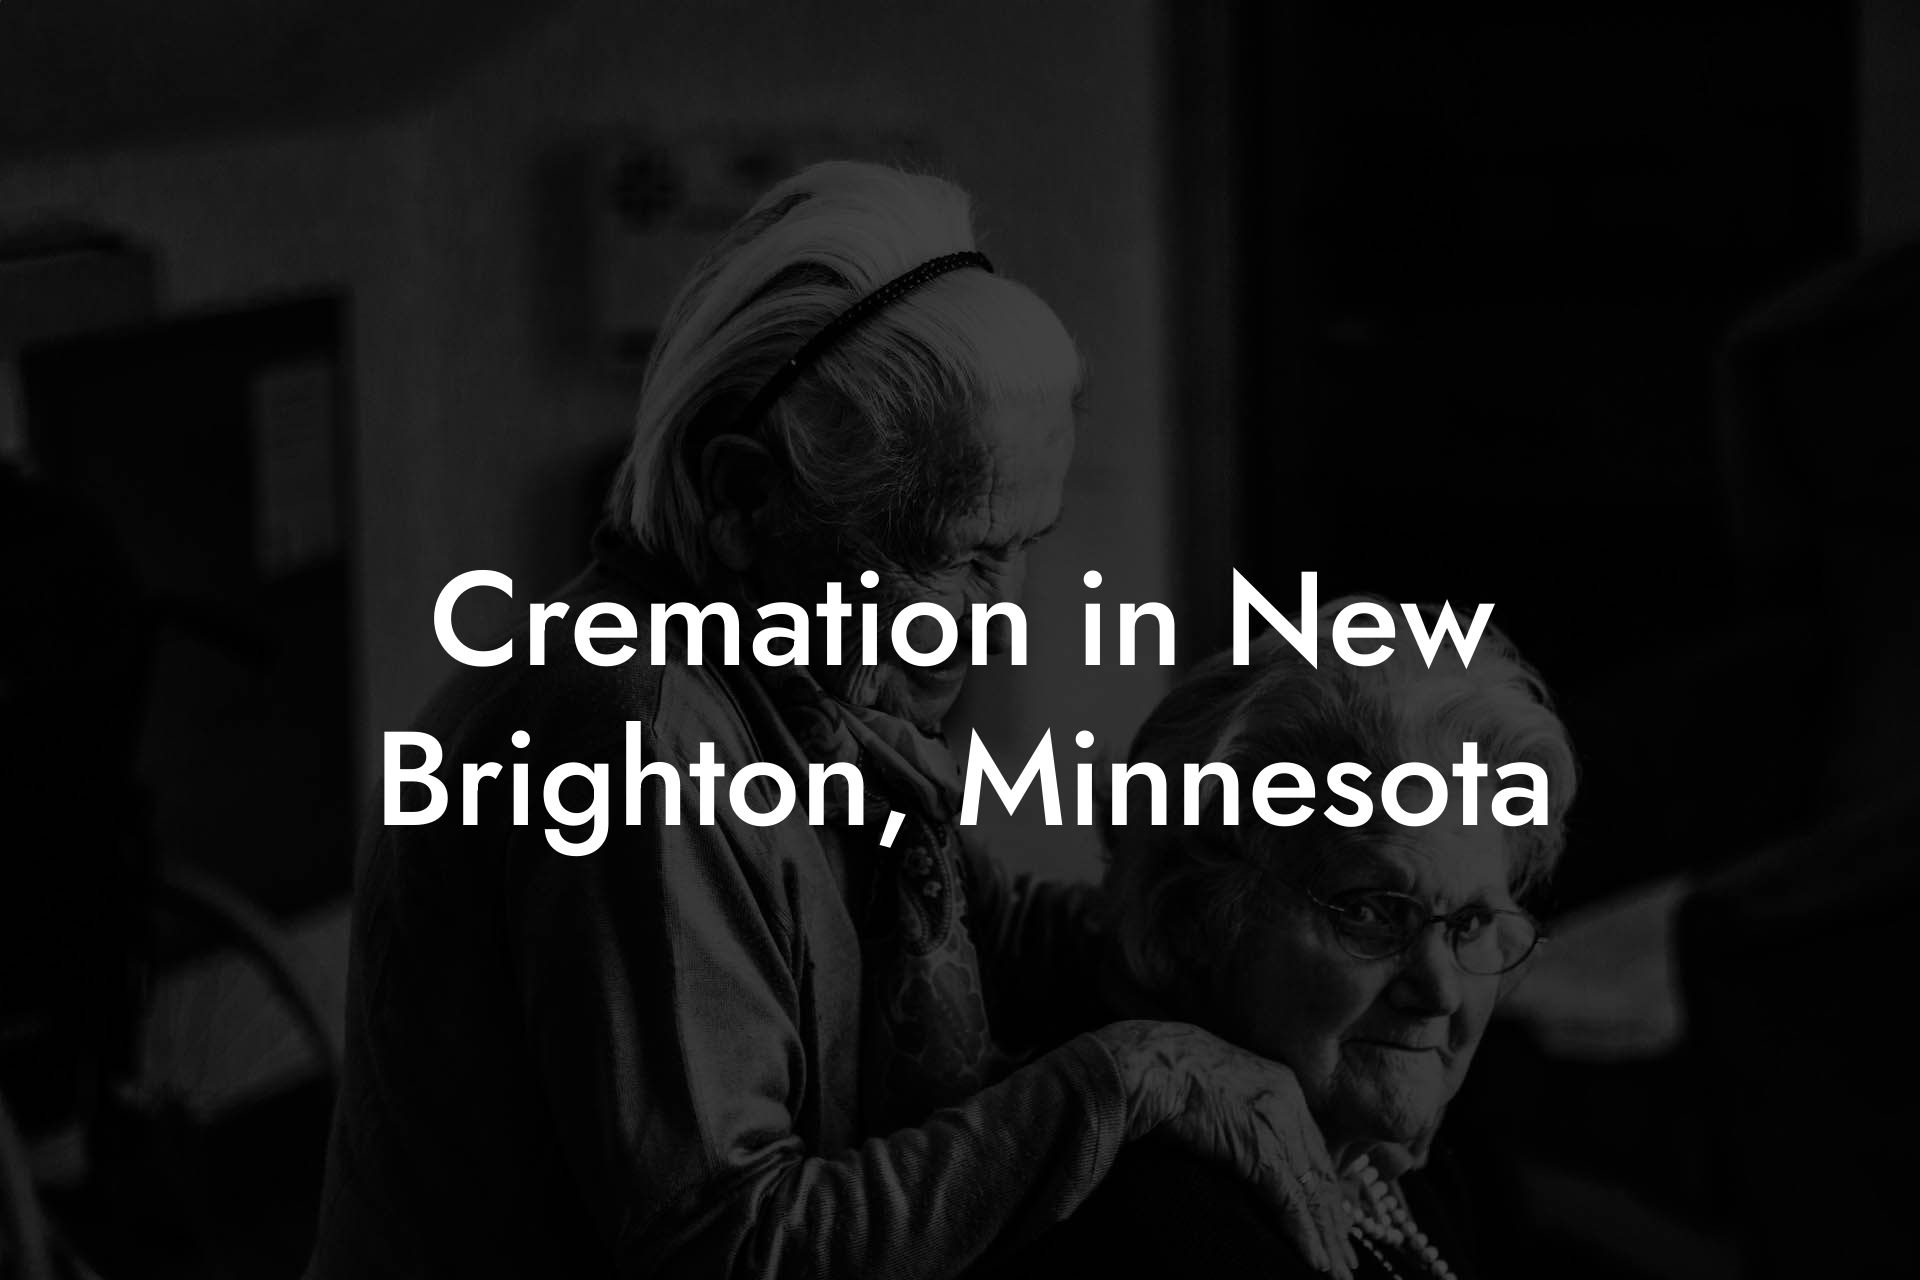 Cremation in New Brighton, Minnesota